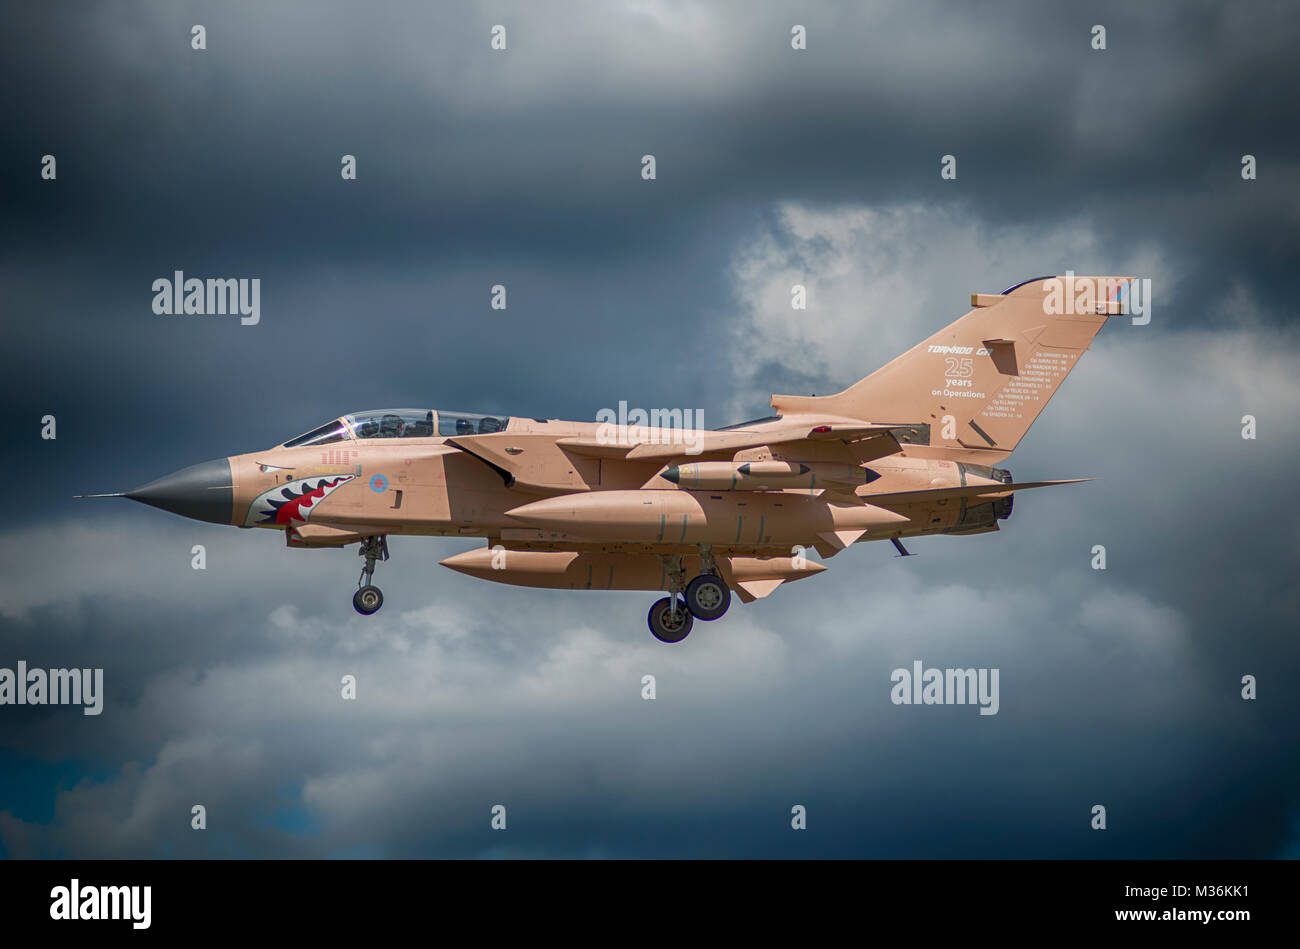 RAF Tornado in desert camouflage landing against grey sky, Farnborough air show. Stock Photo